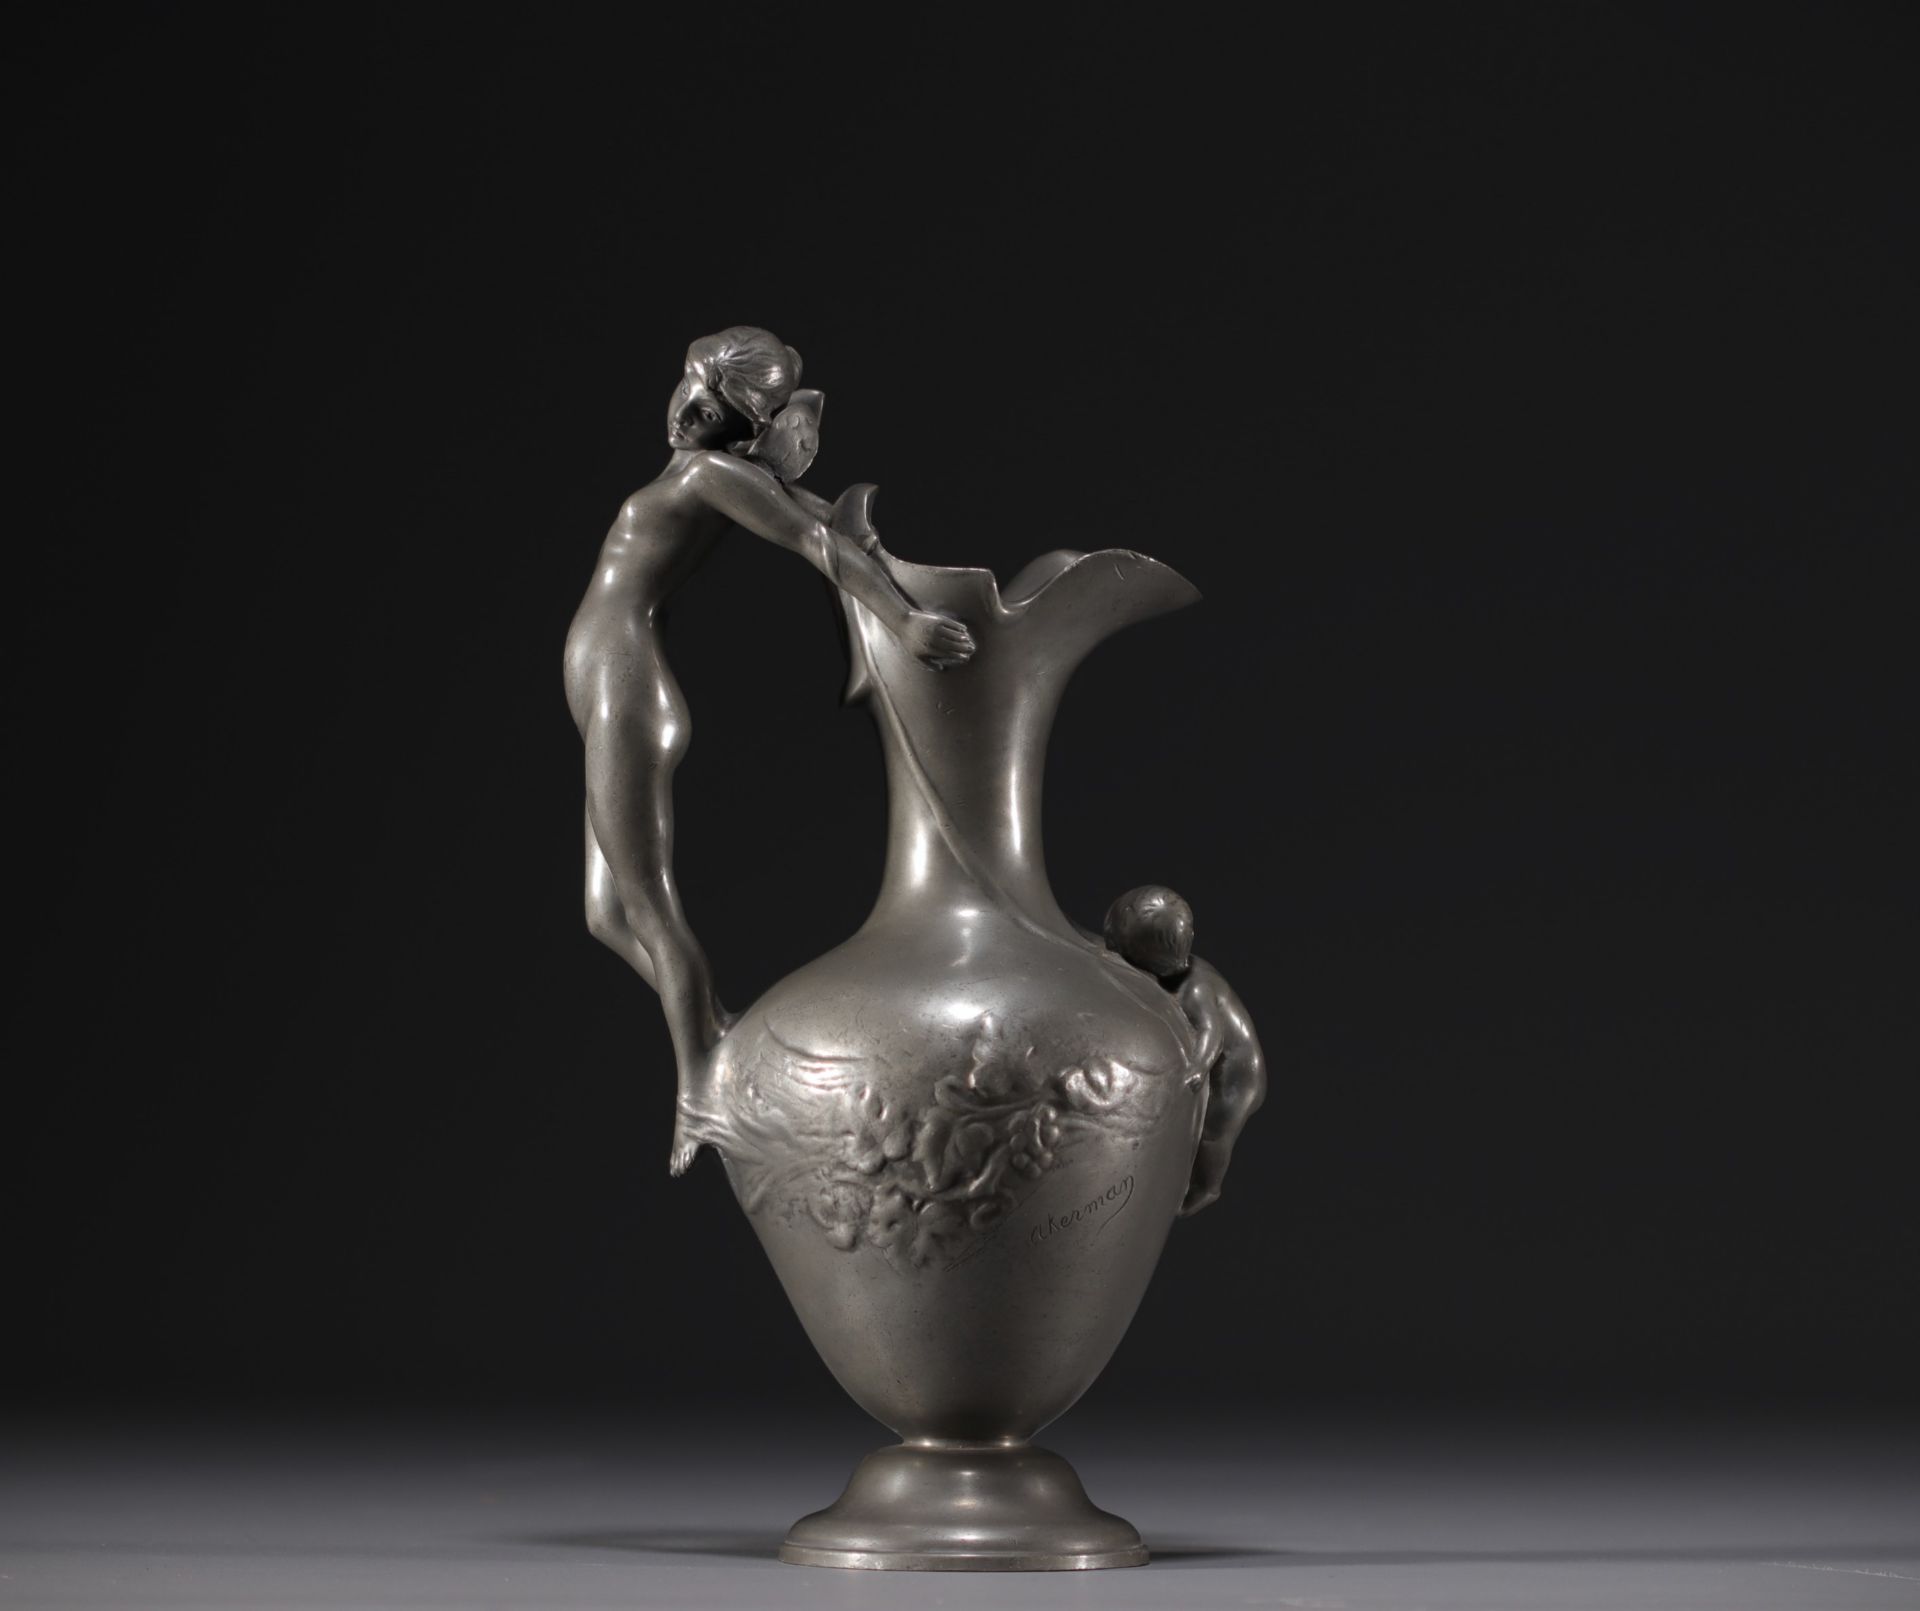 AKERMAN - Pewter jug vase with elf and baby design, circa 1900.